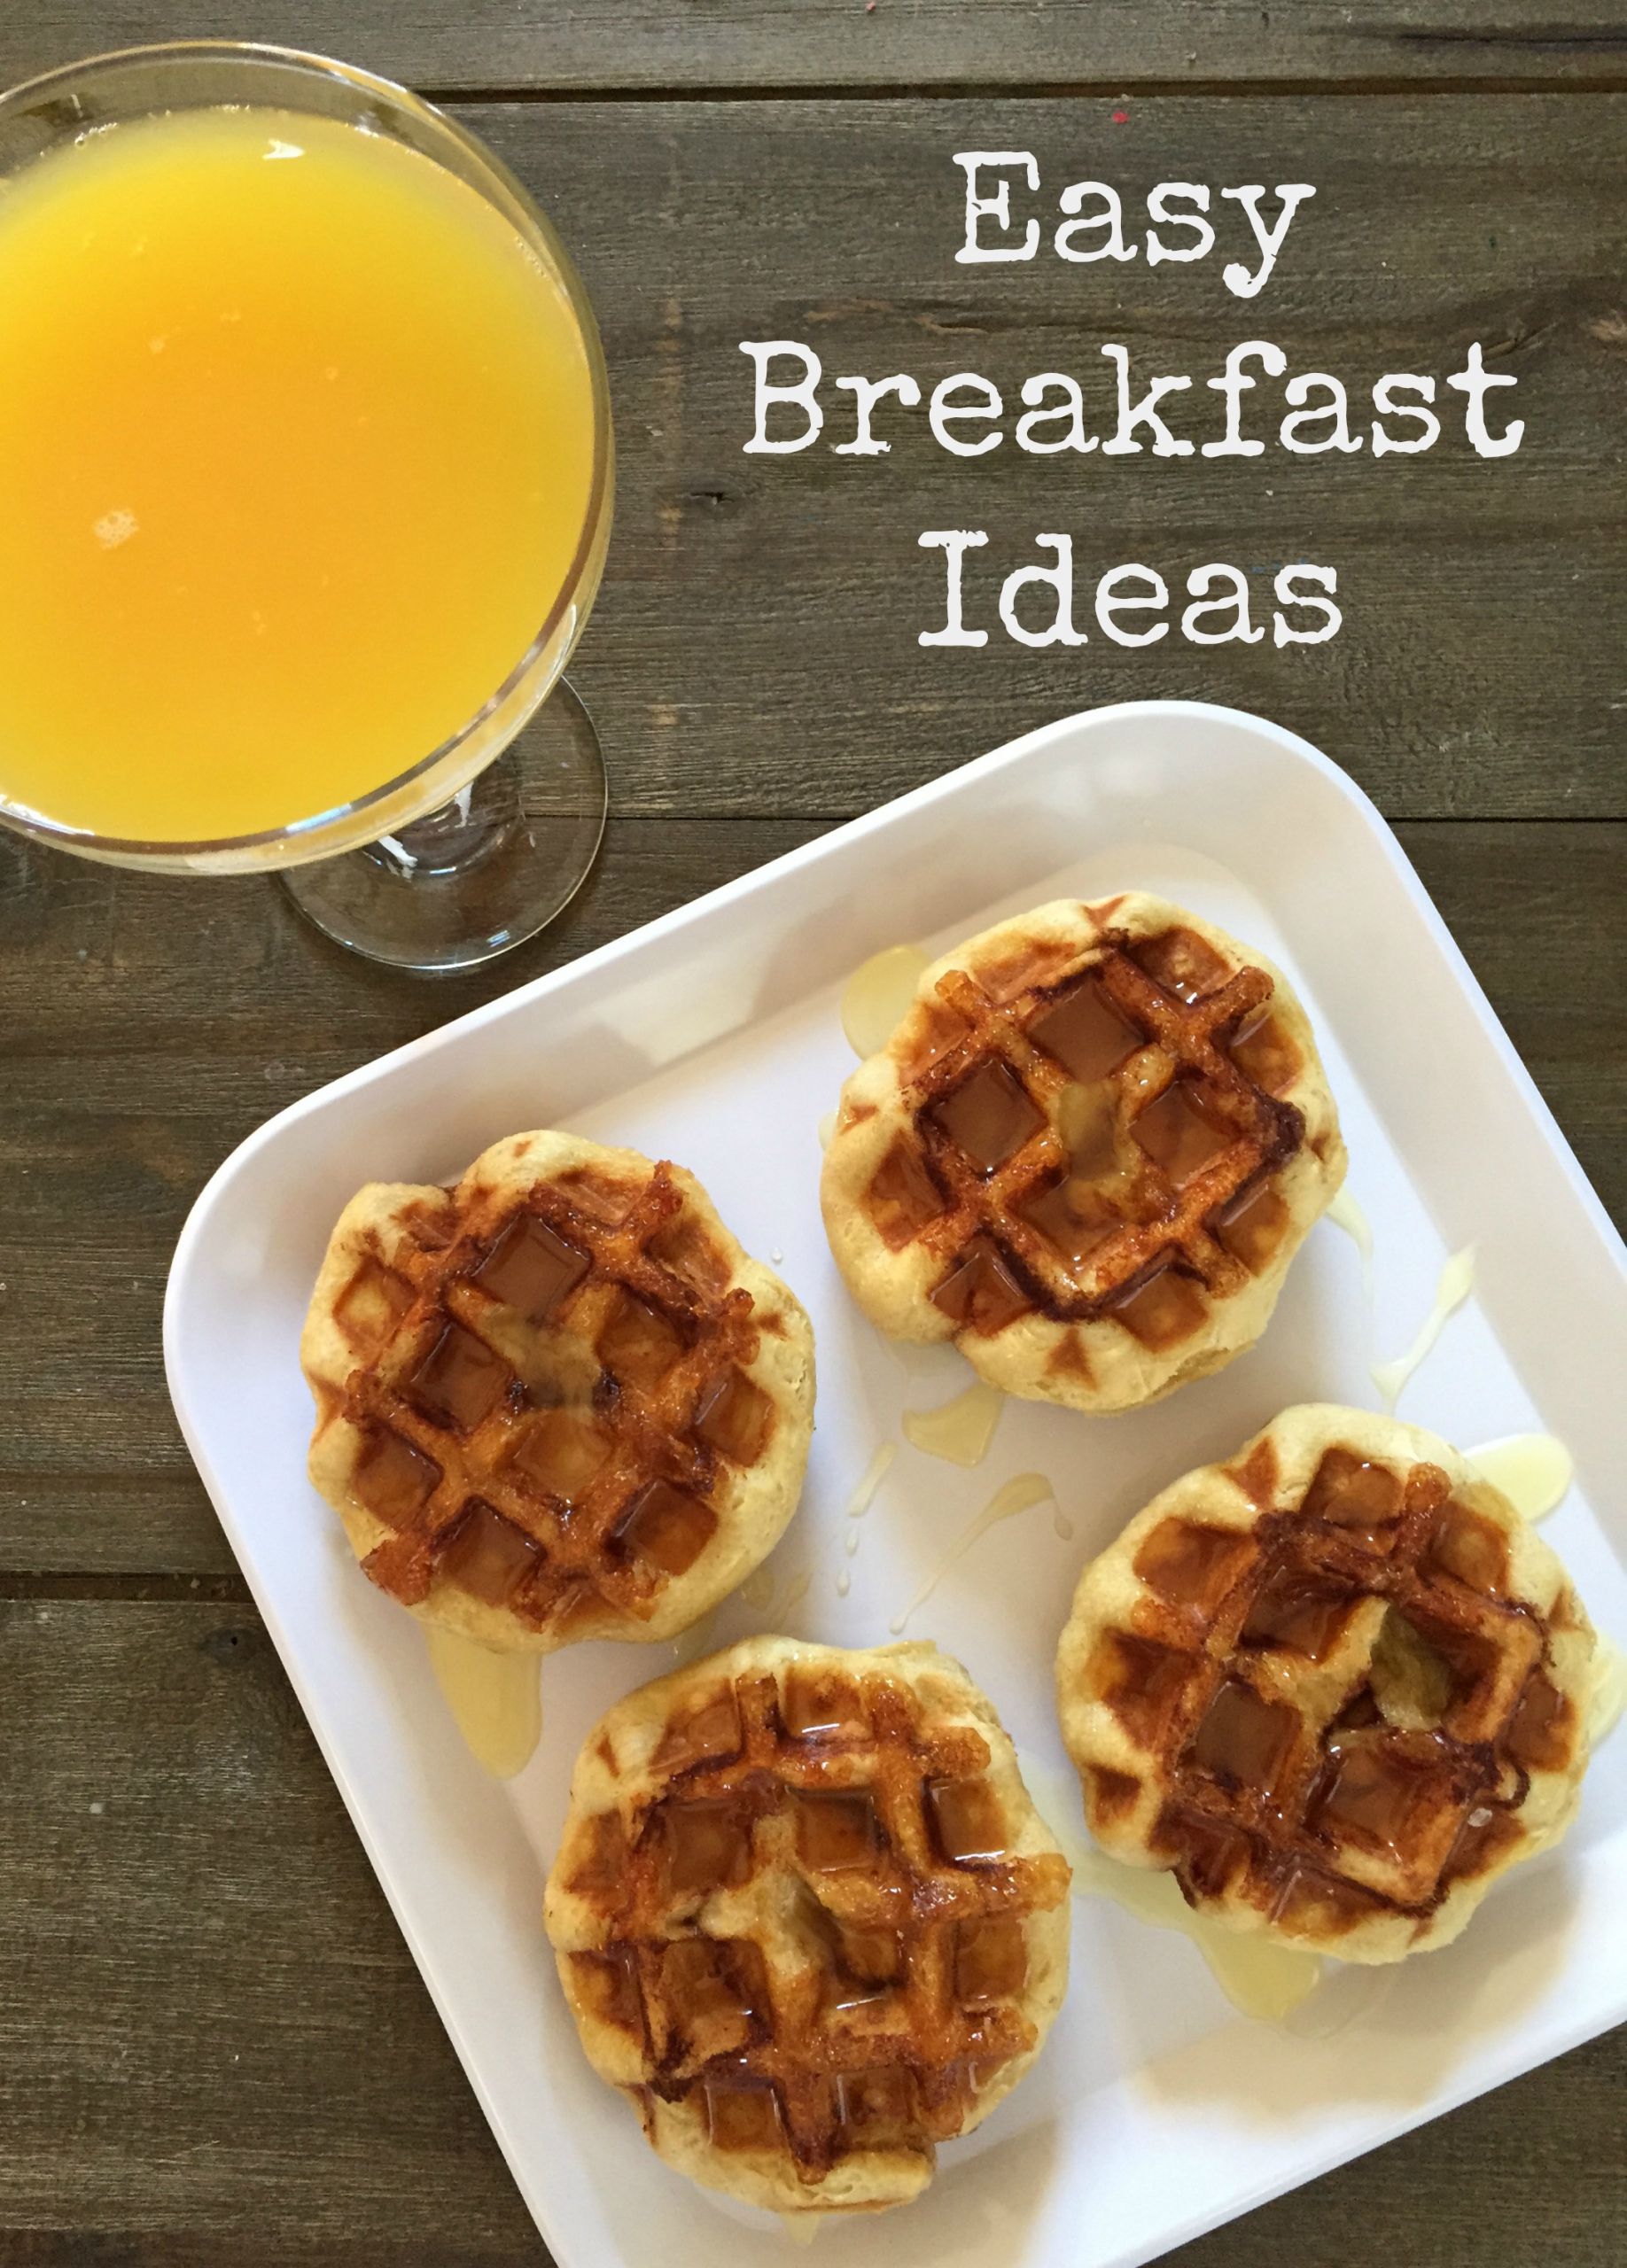 Quick Breakfast Recipes
 Easy Breakfast Ideas for a Lazy Sunday Morning